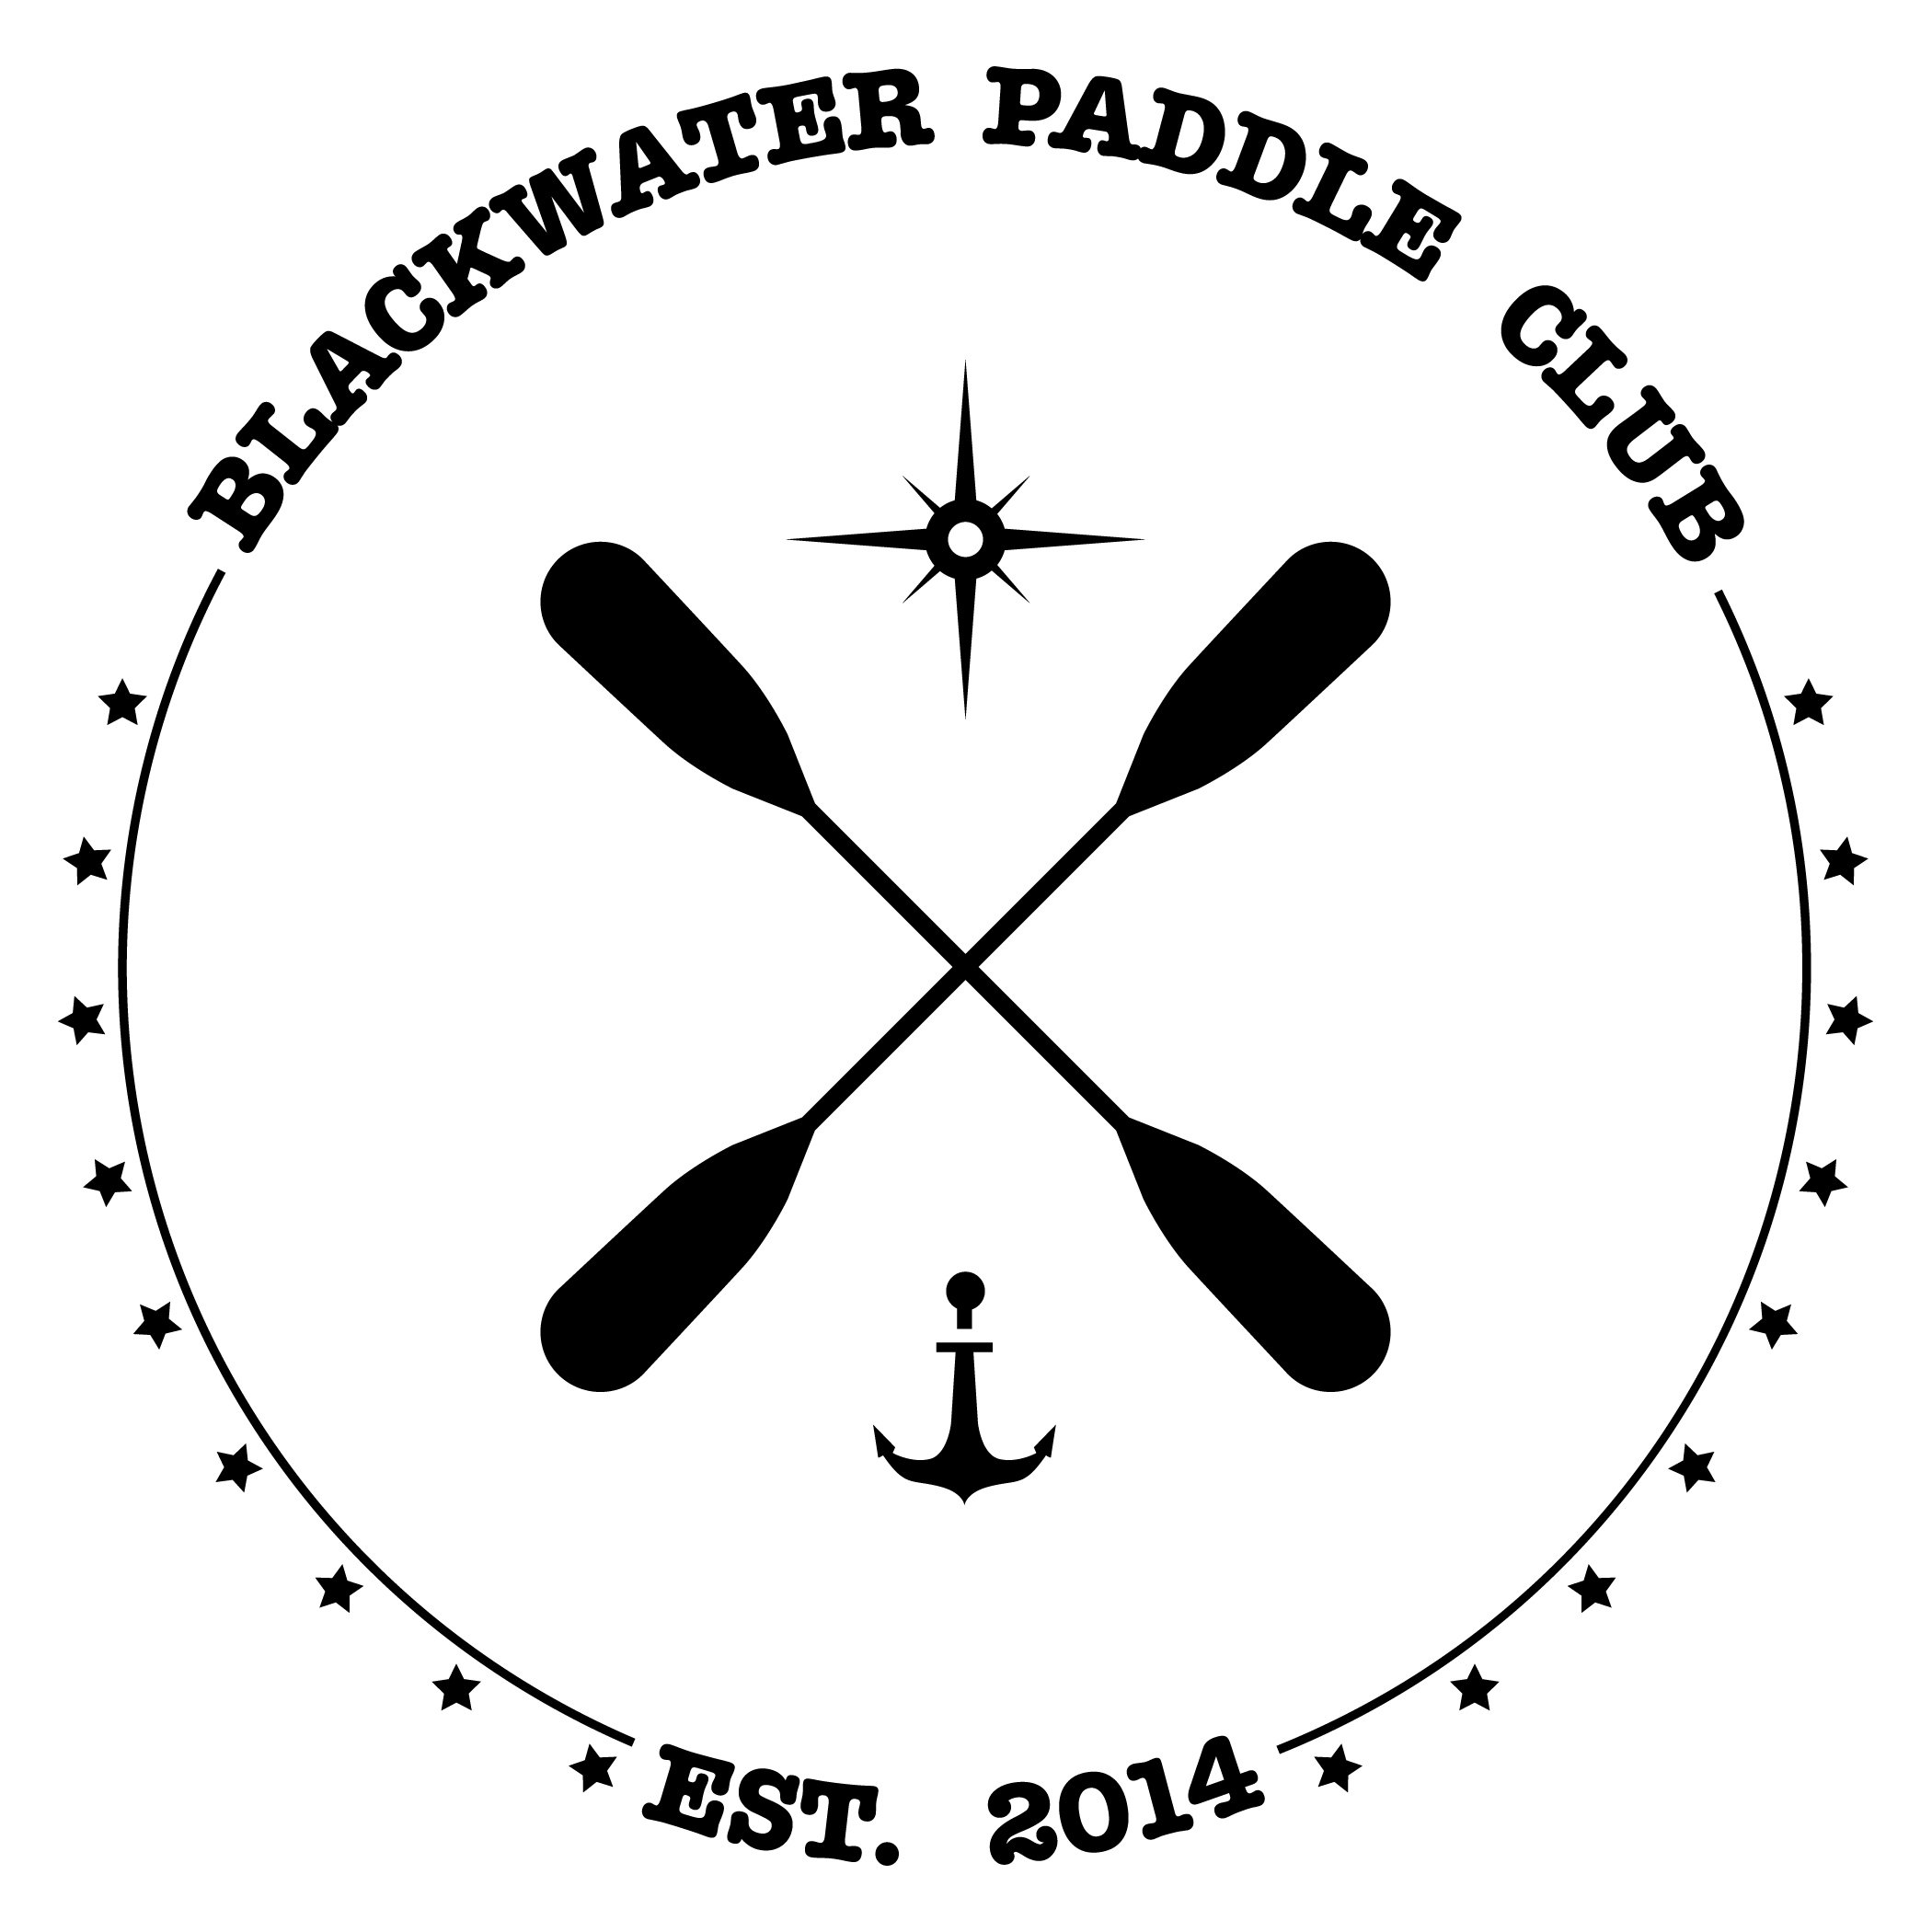  BLACKWATER PADDLE CLUB EST. 2014